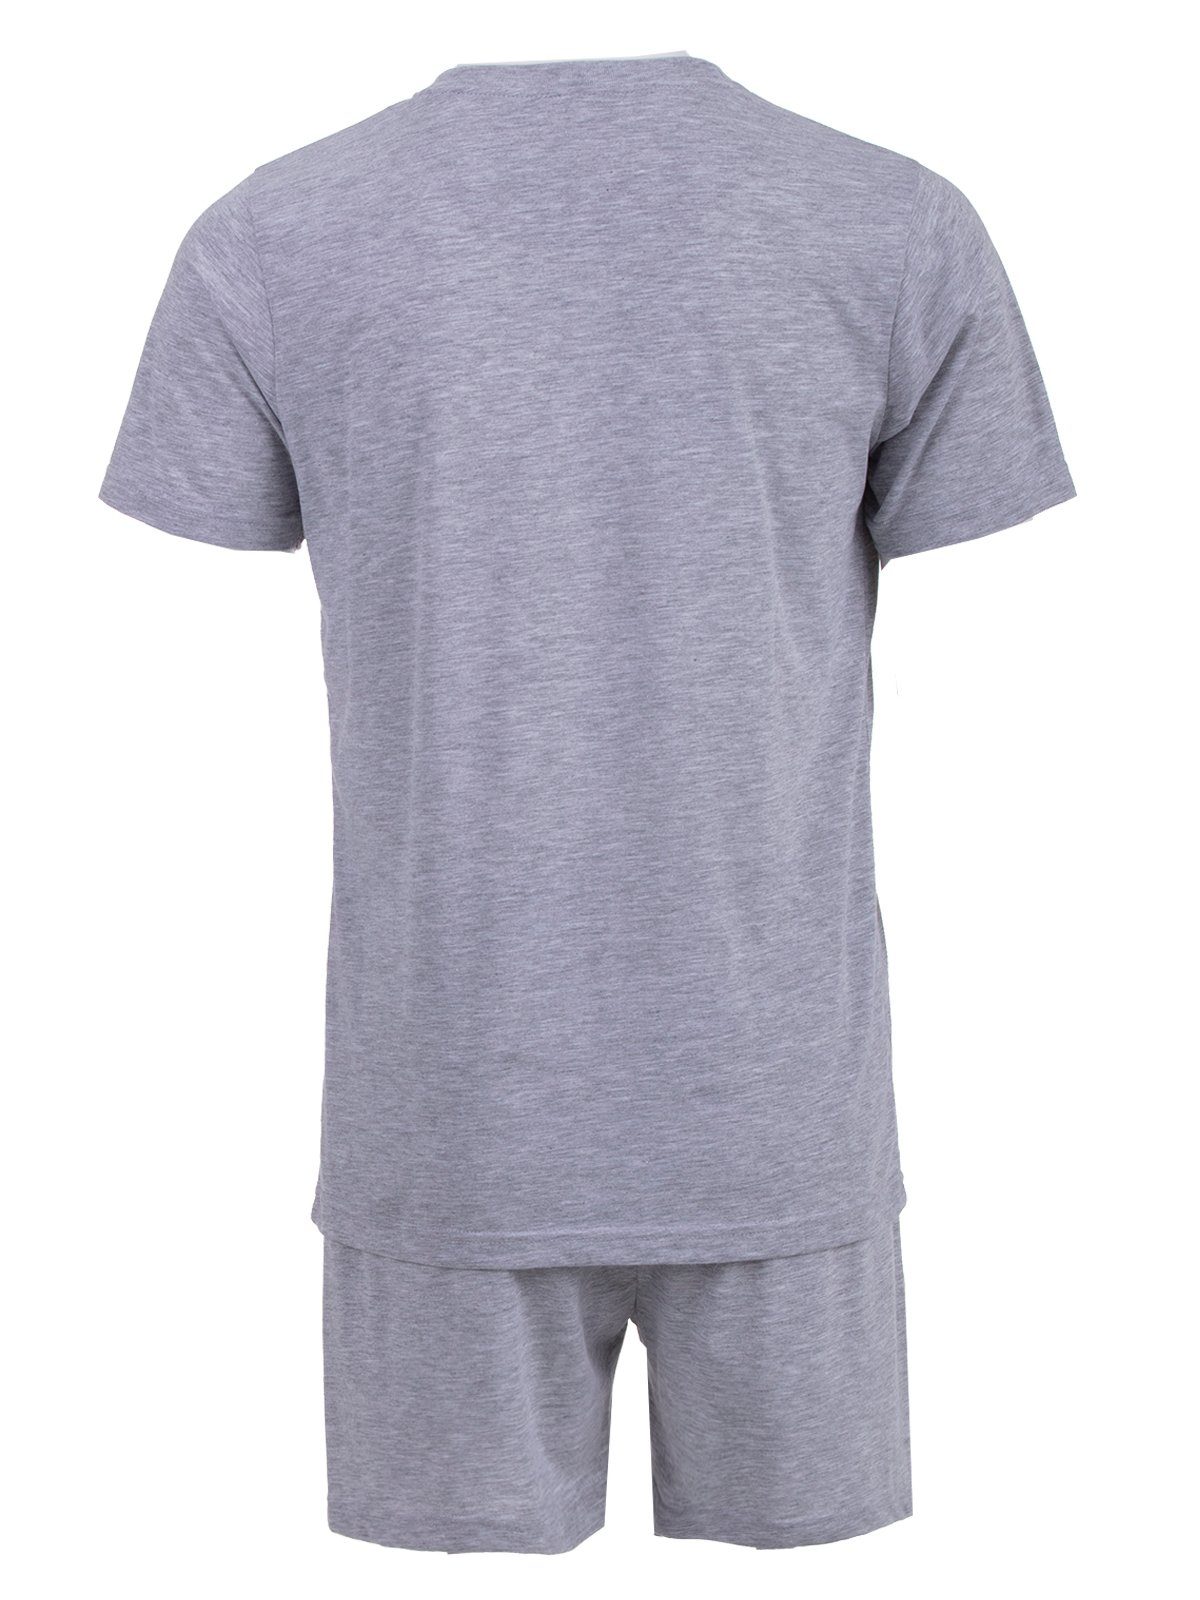 Schlafanzug grau Set - Shorty Pyjama Henry Vintage Terre